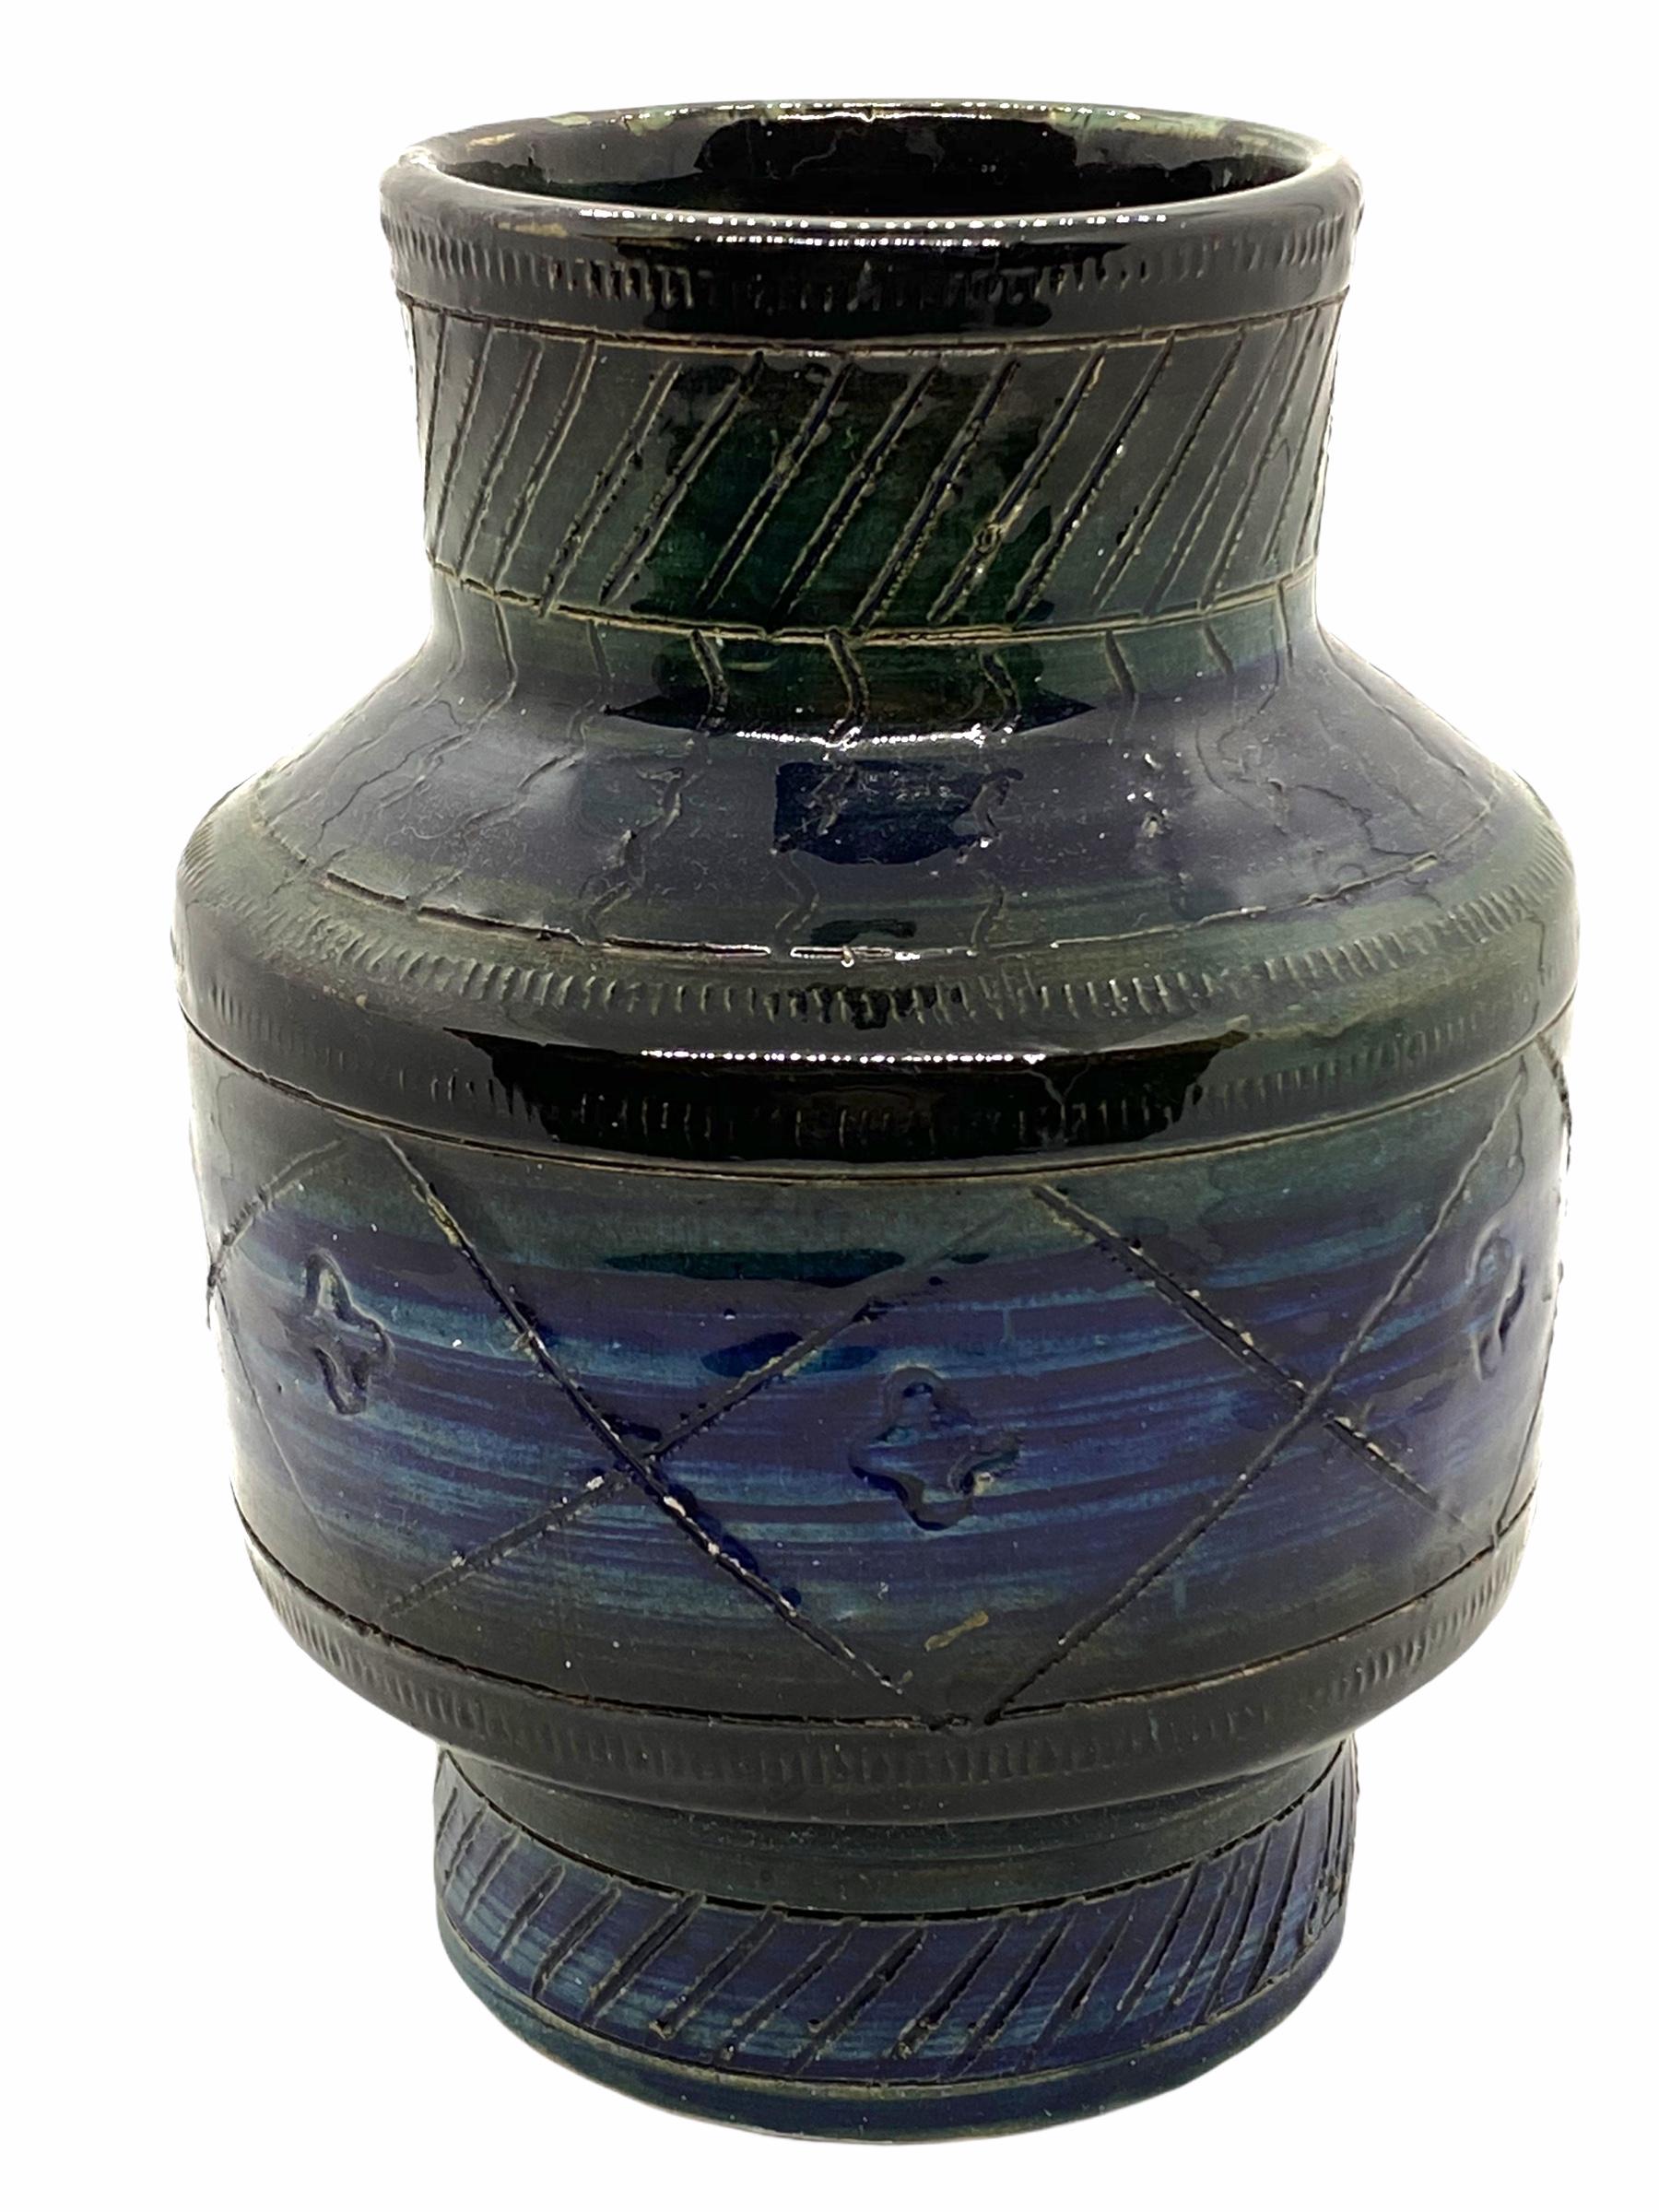 Mid-Century Modern Aldo Londi Rimini Blaue Bitossi-Keramik-Vase, Italien, 1960er Jahre (Mitte des 20. Jahrhunderts) im Angebot